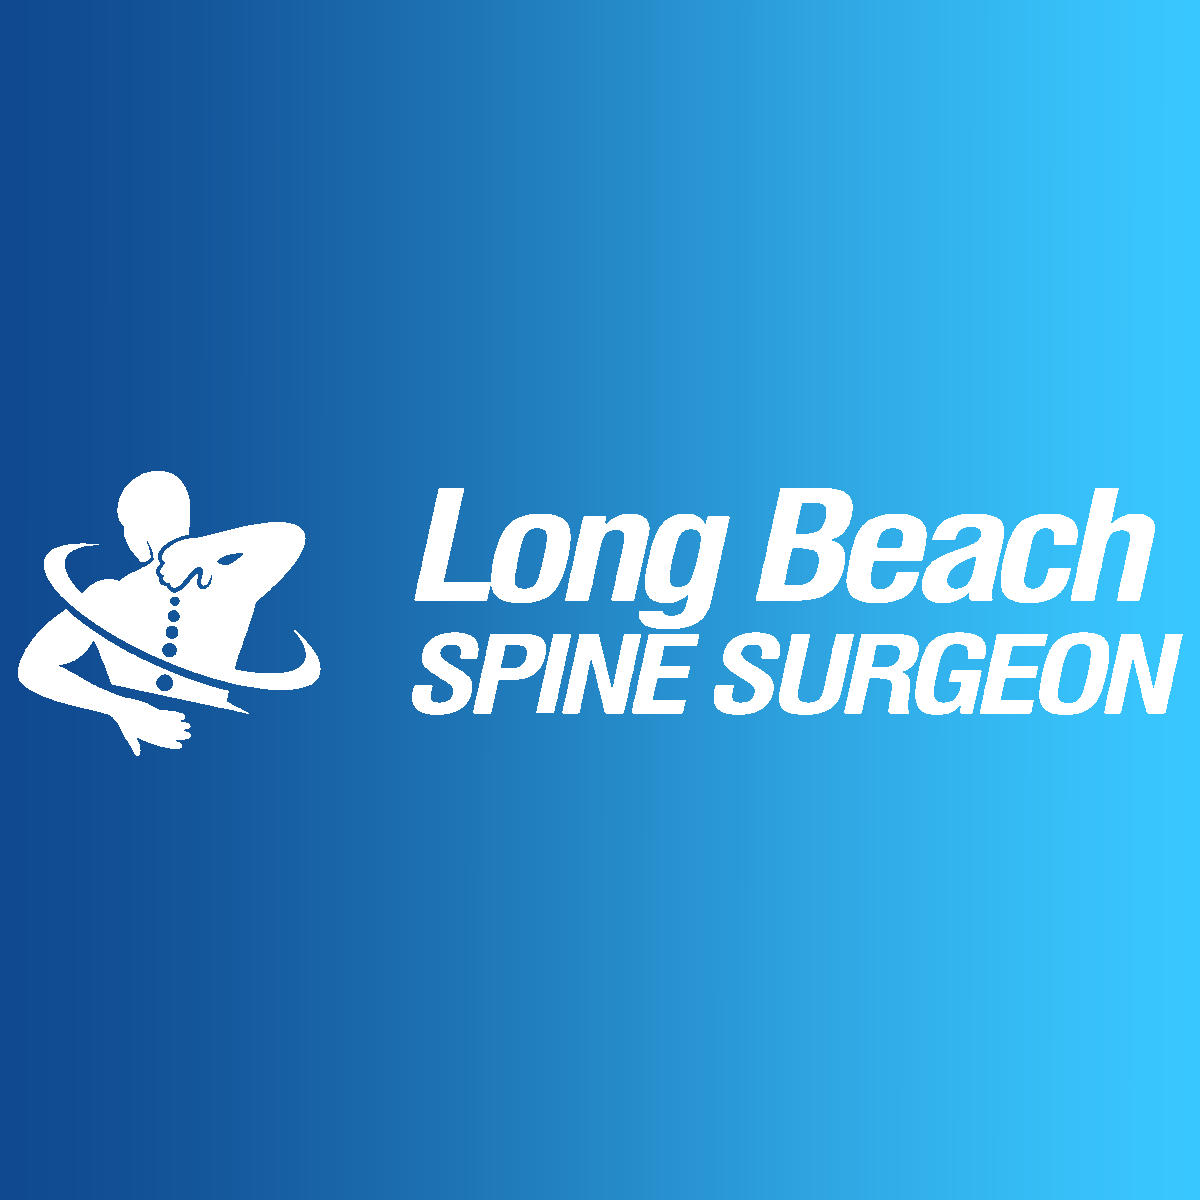 Long Beach Spine Surgeon Logo